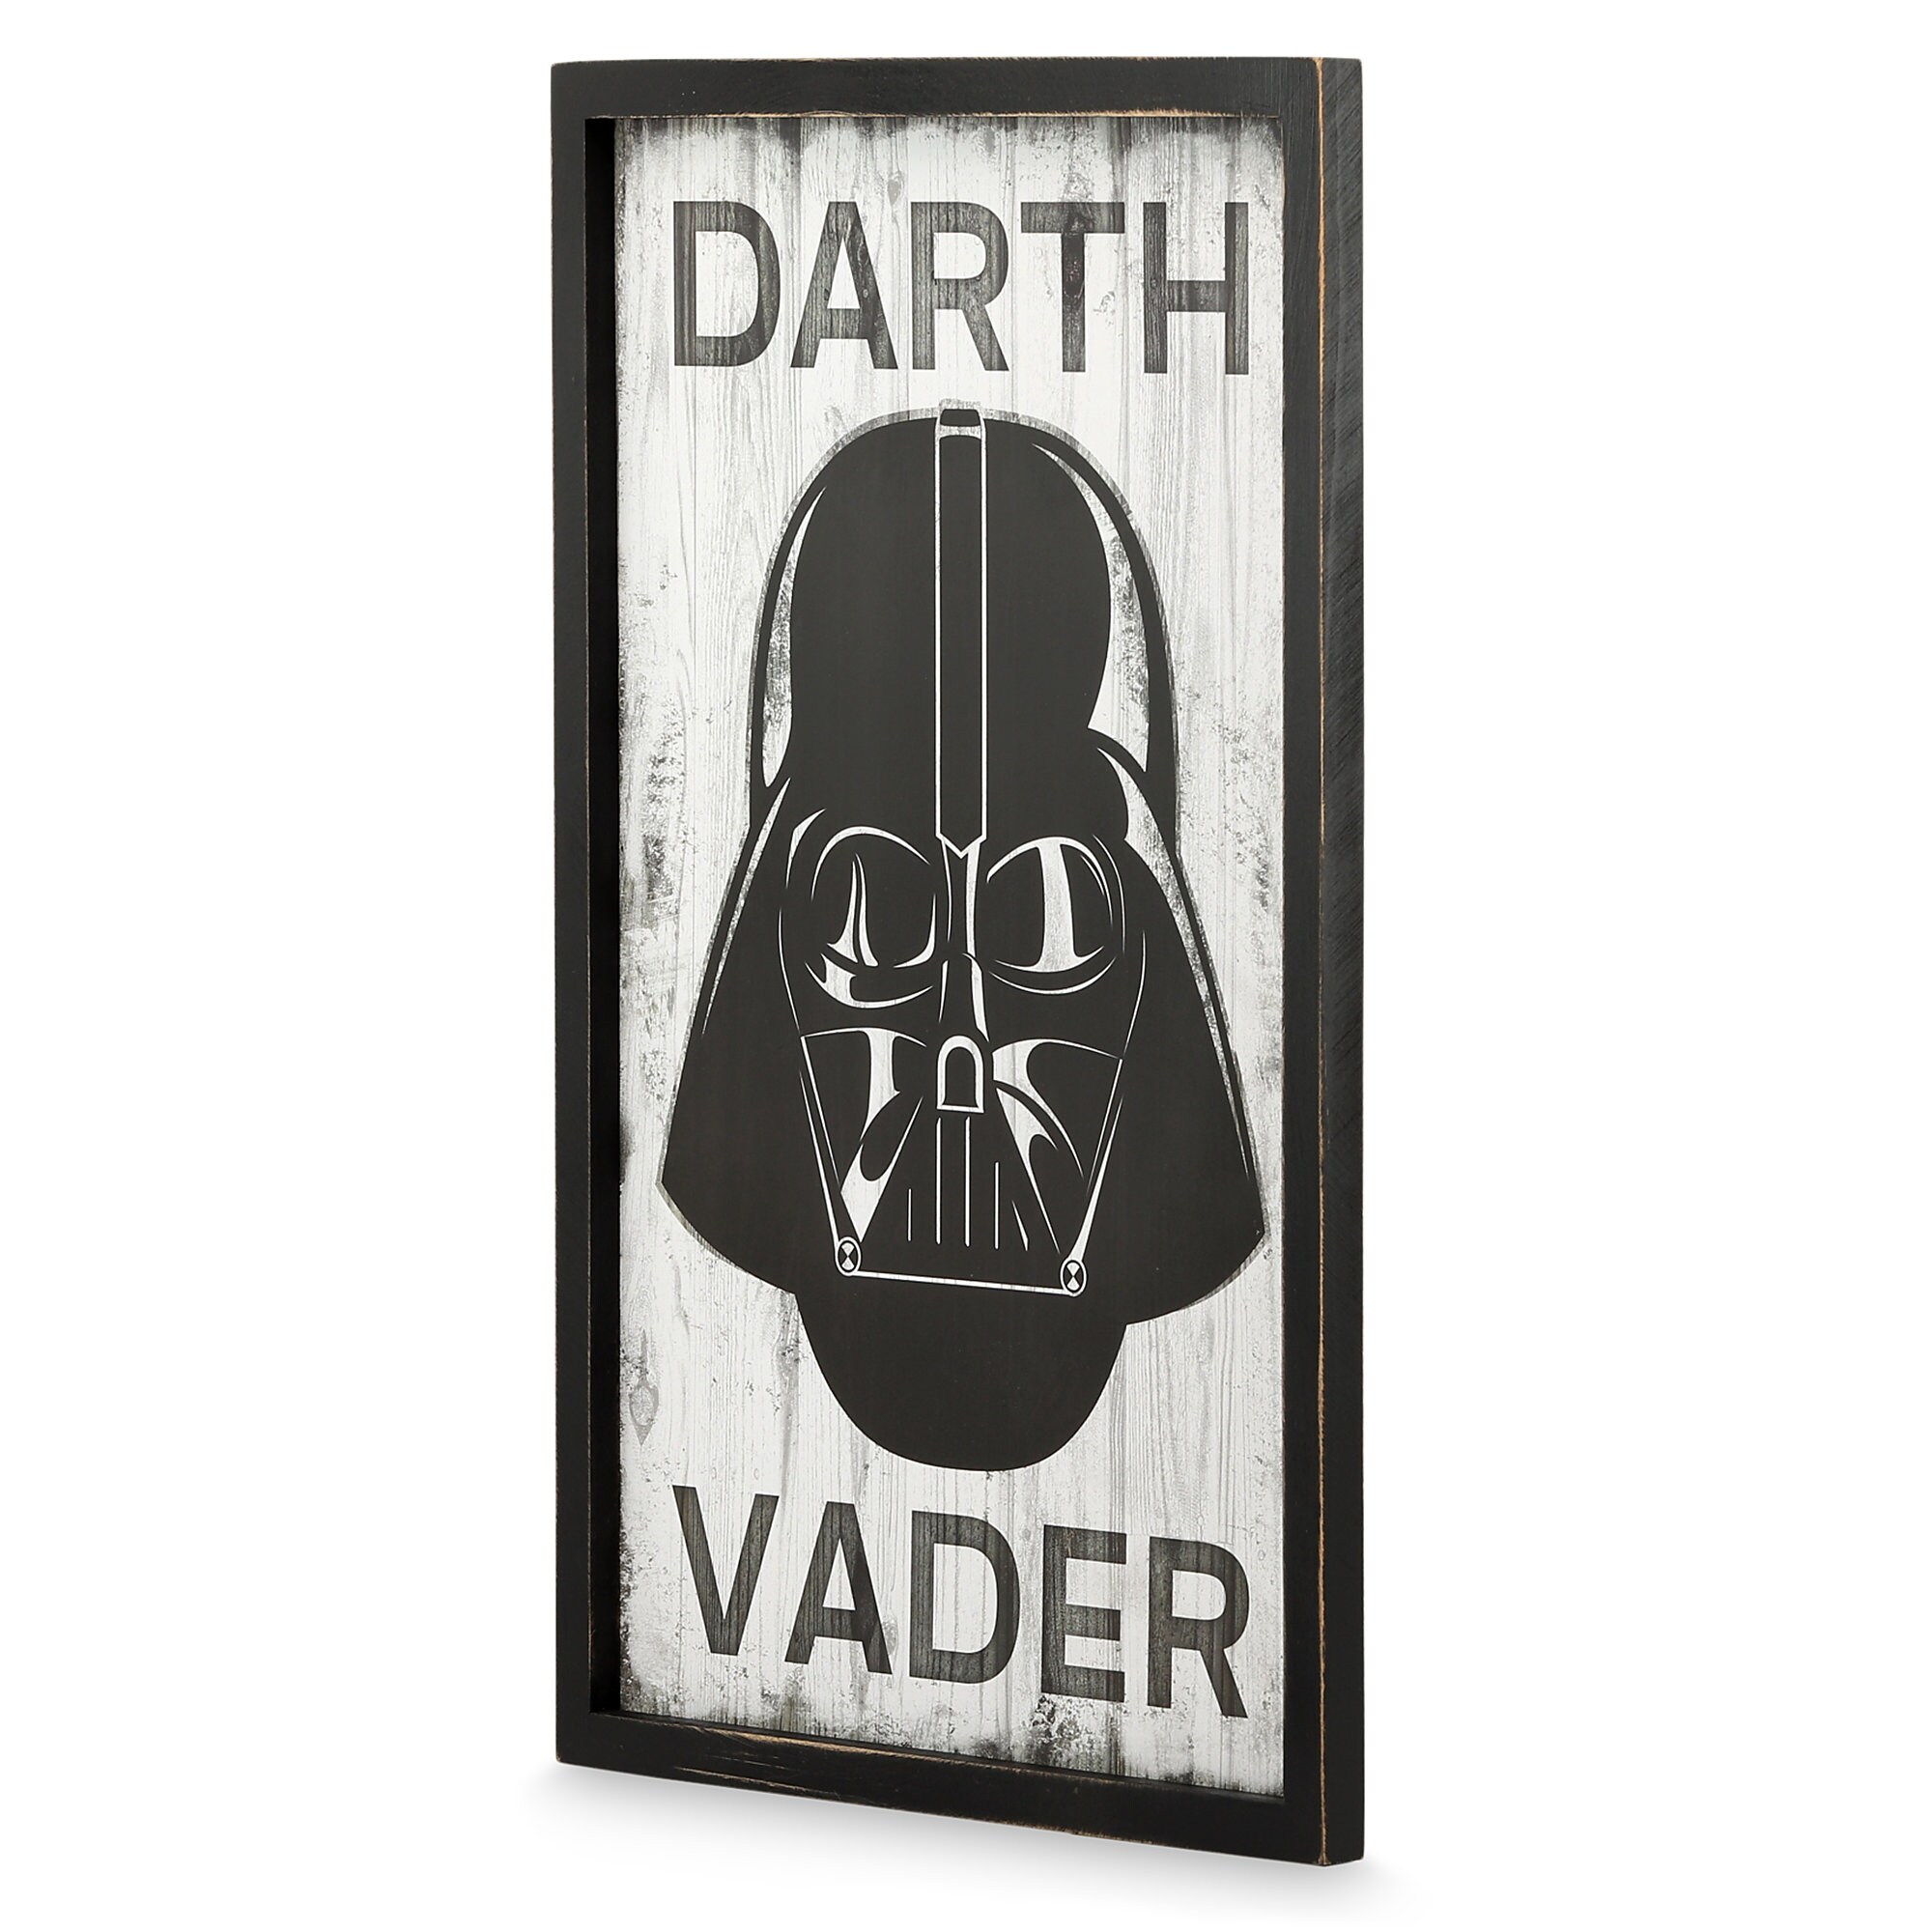 Darth Vader Wall Decor - Star Wars